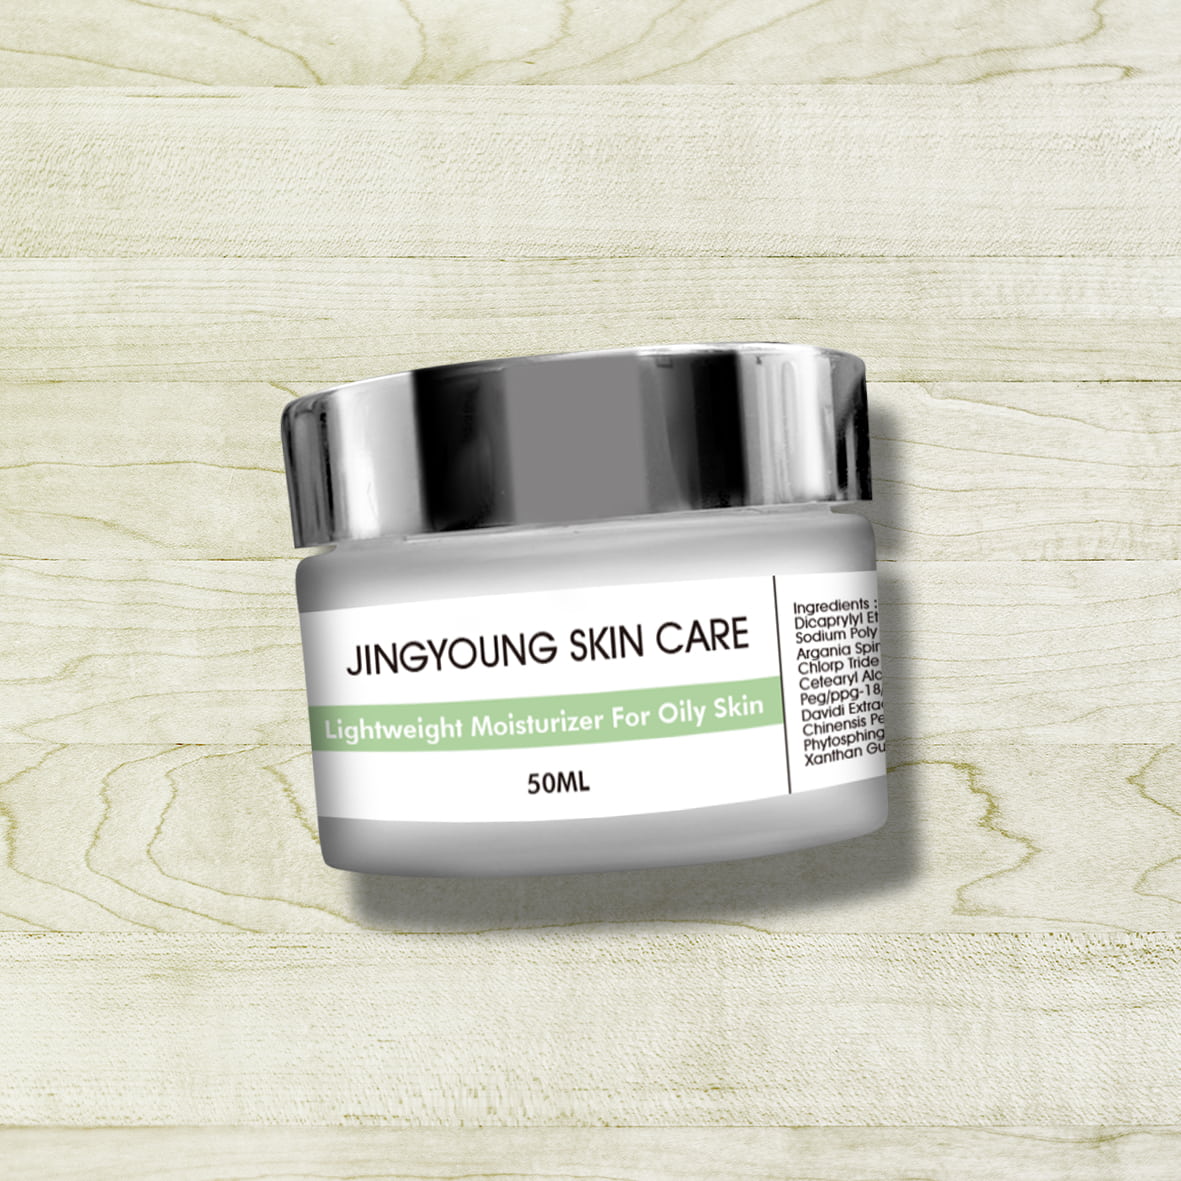 Lightweight moisturizer for oily skin